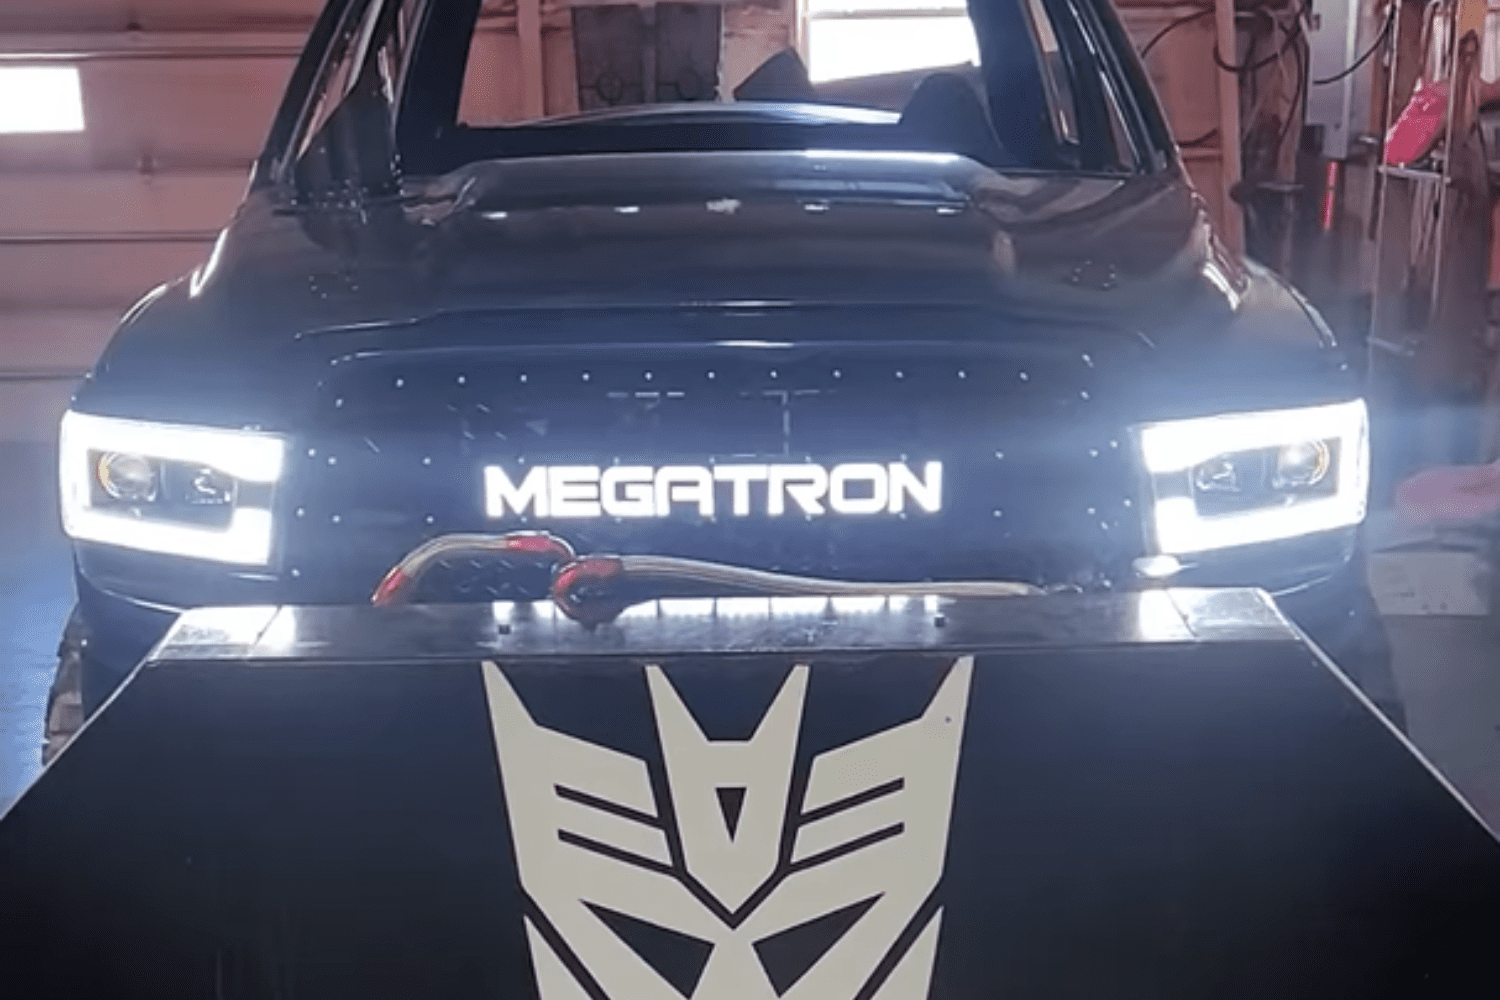 Megatron black vehicle with headlights on